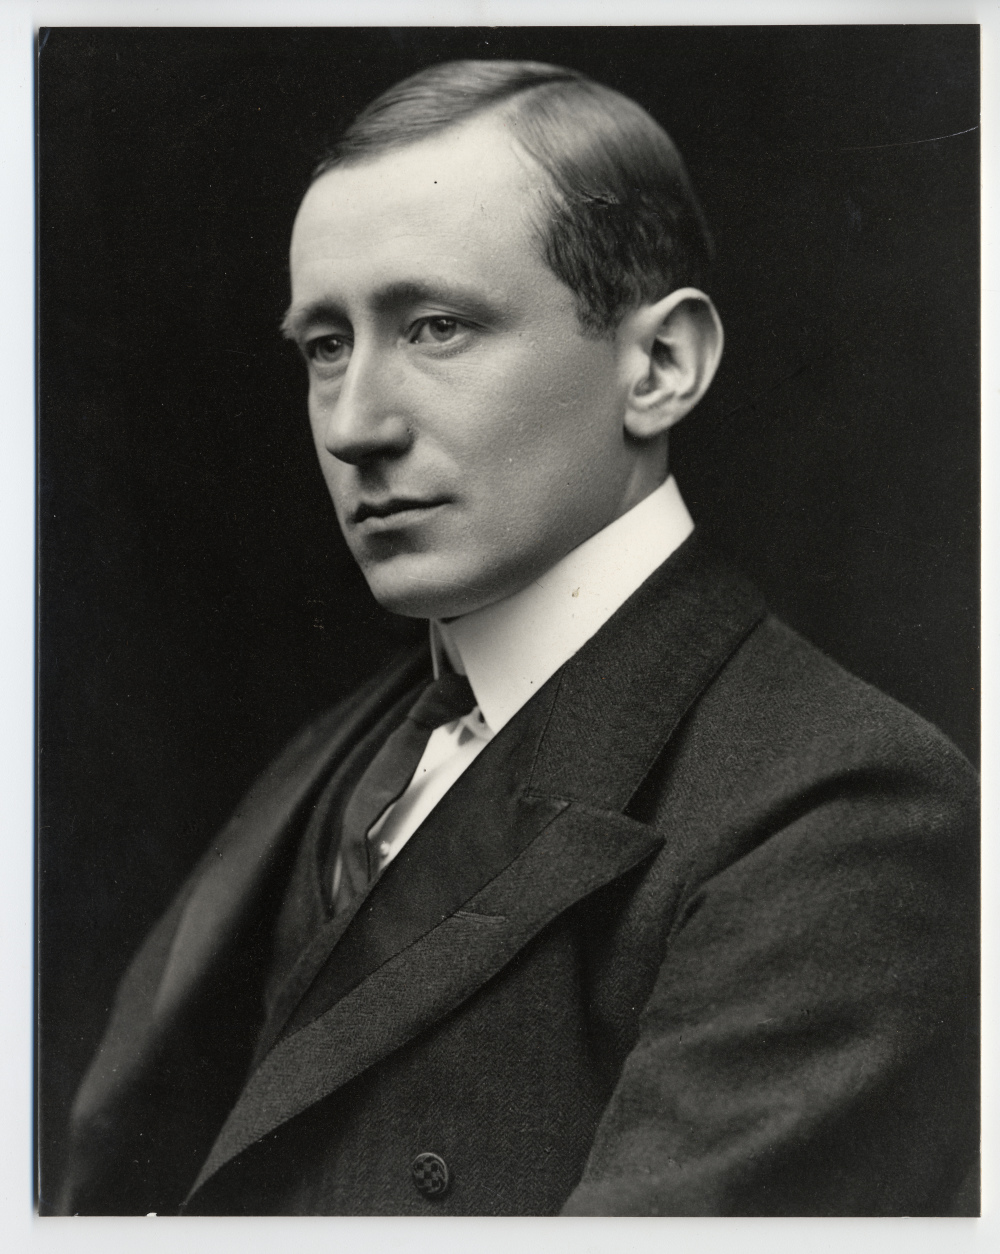 preview image for Photographic Portrait of Guglielmo Marconi, 20th Century